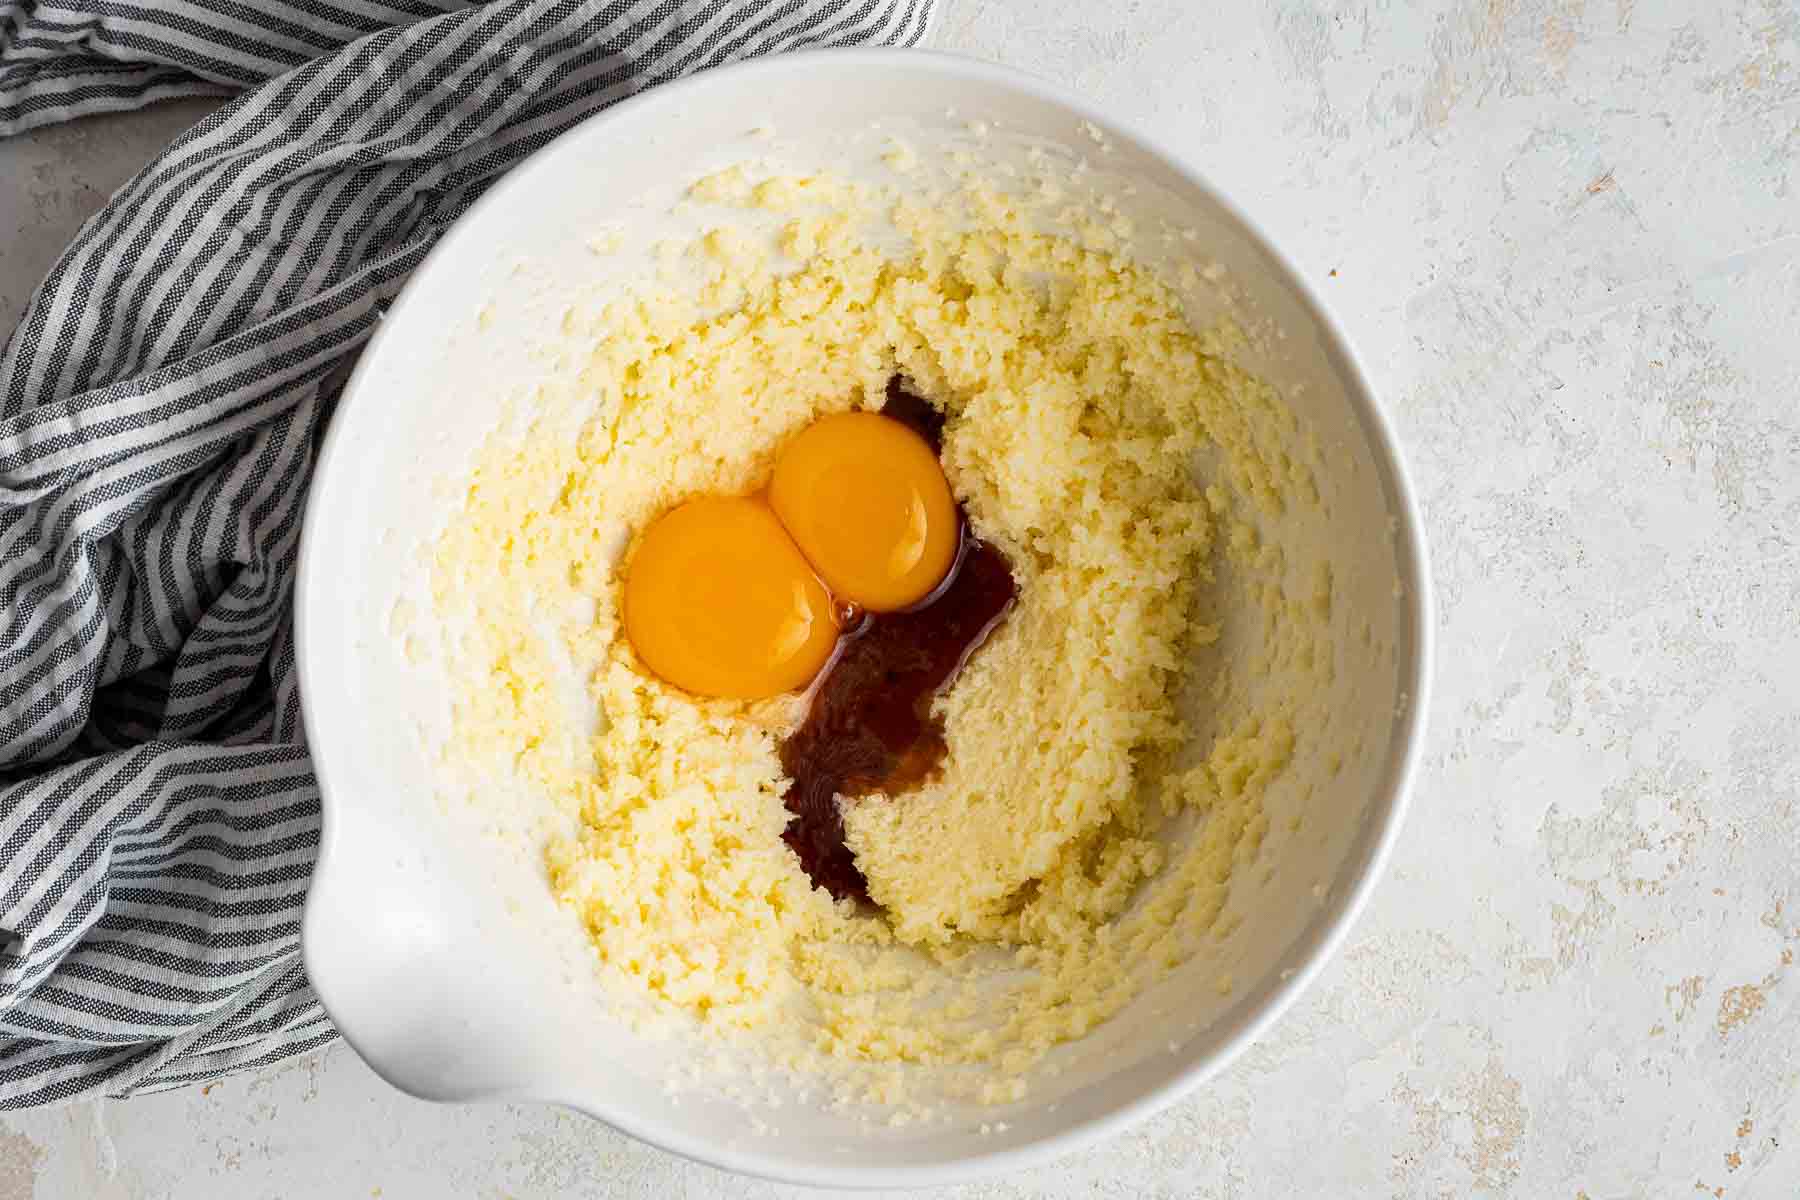 Egg yolks and vanilla on top of yellow batter.